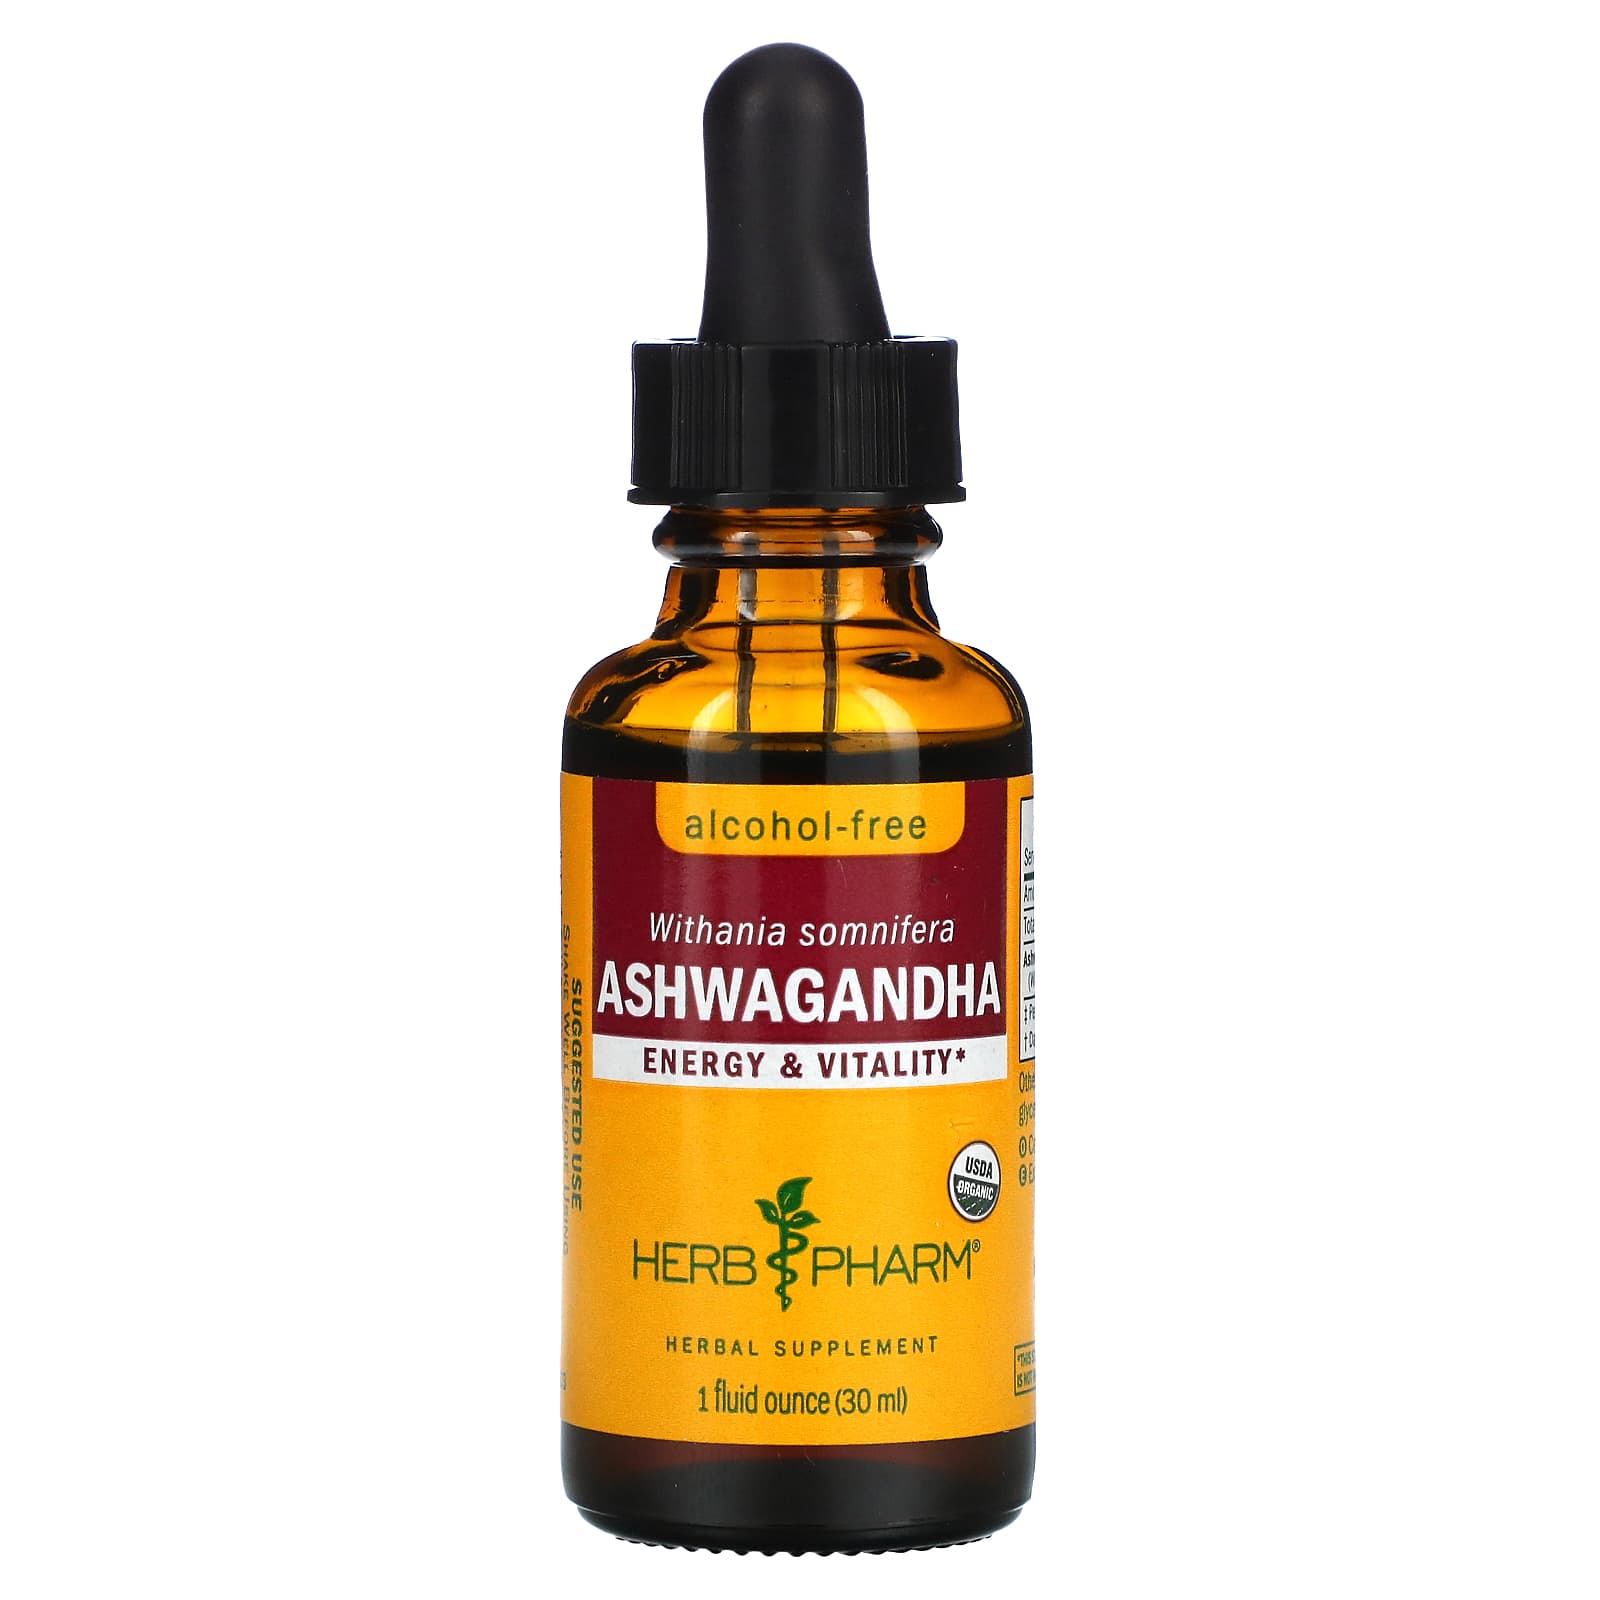 Herb Pharm-Ashwagandha-Alcohol-free-1 fl oz (30 ml)